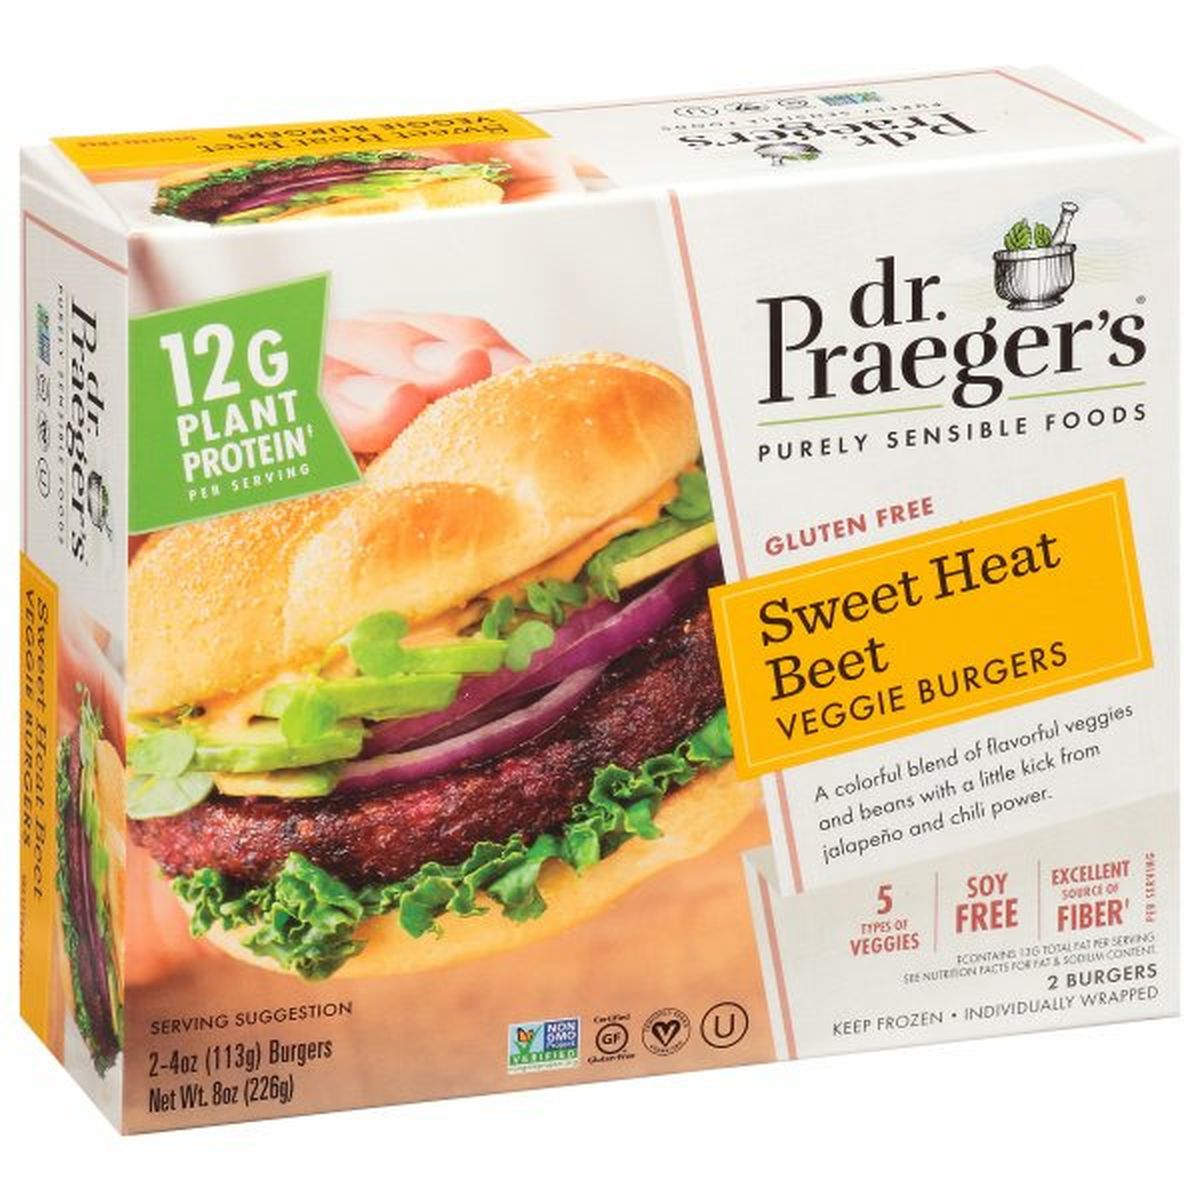 Calories in Dr. Praeger's Veggie Burgers, Sweet Heat Beet